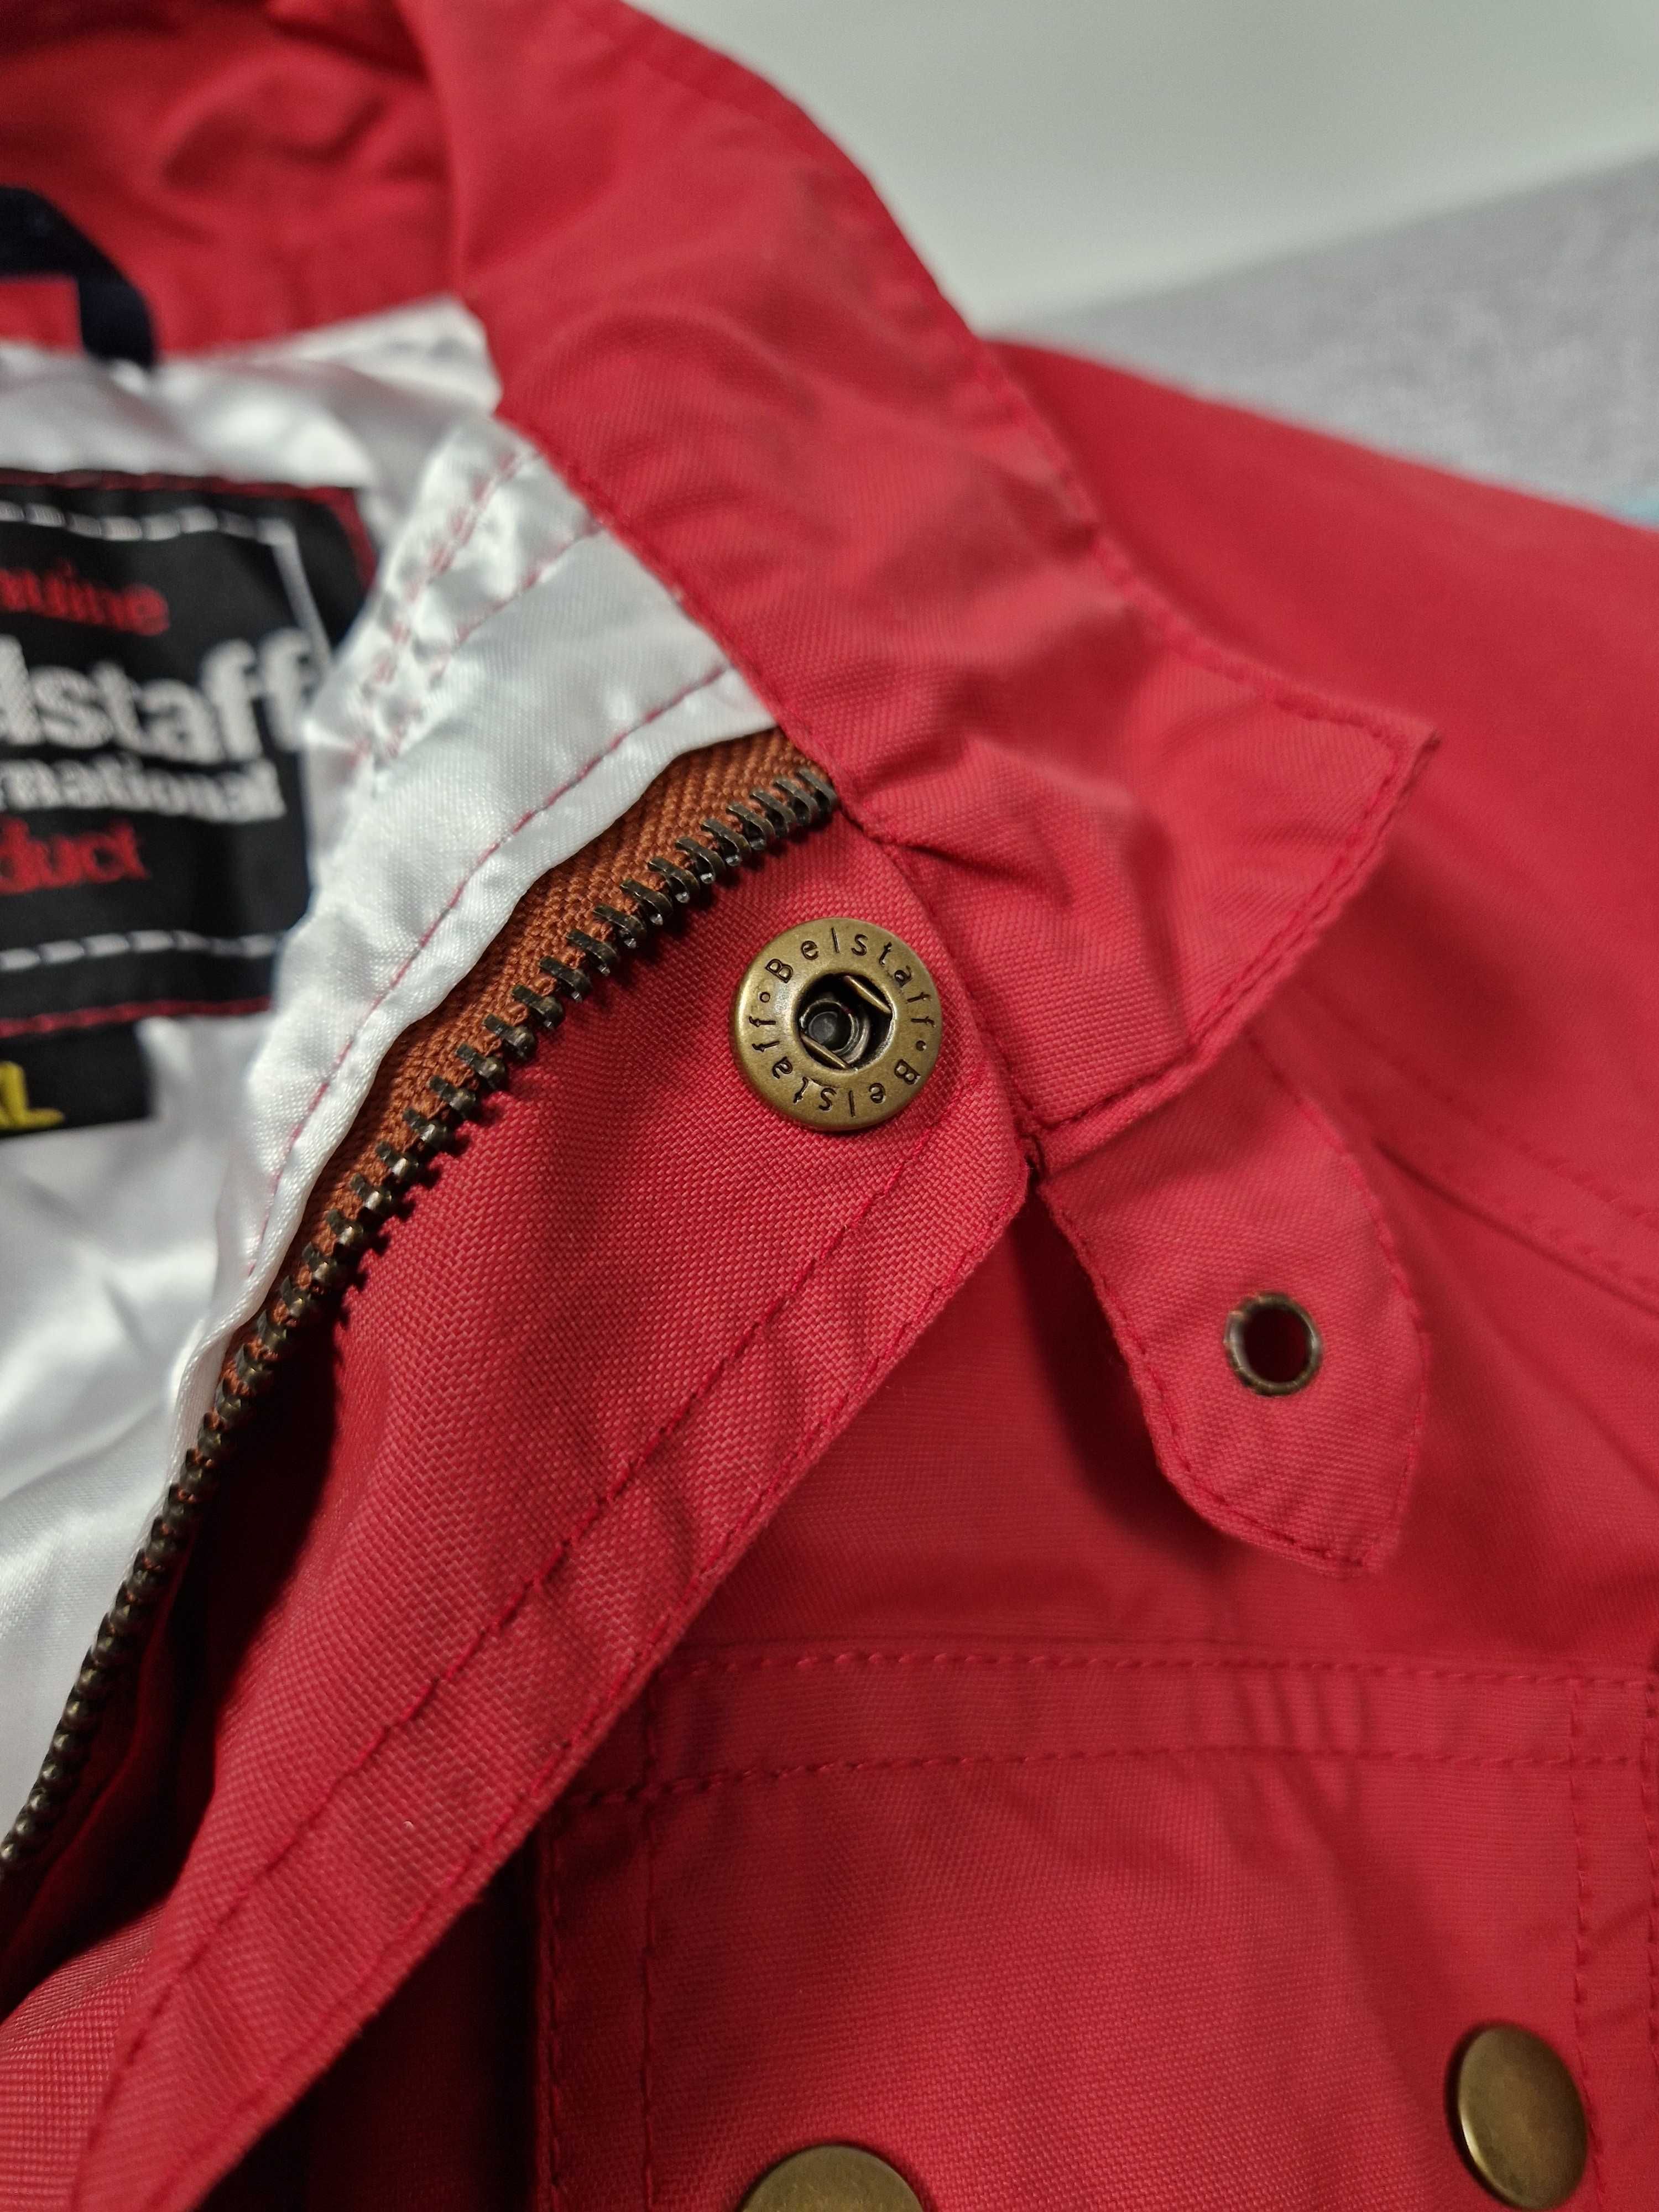 Belstaff Women's Biker Jacket Red kurtka letnia damska czerwona XL